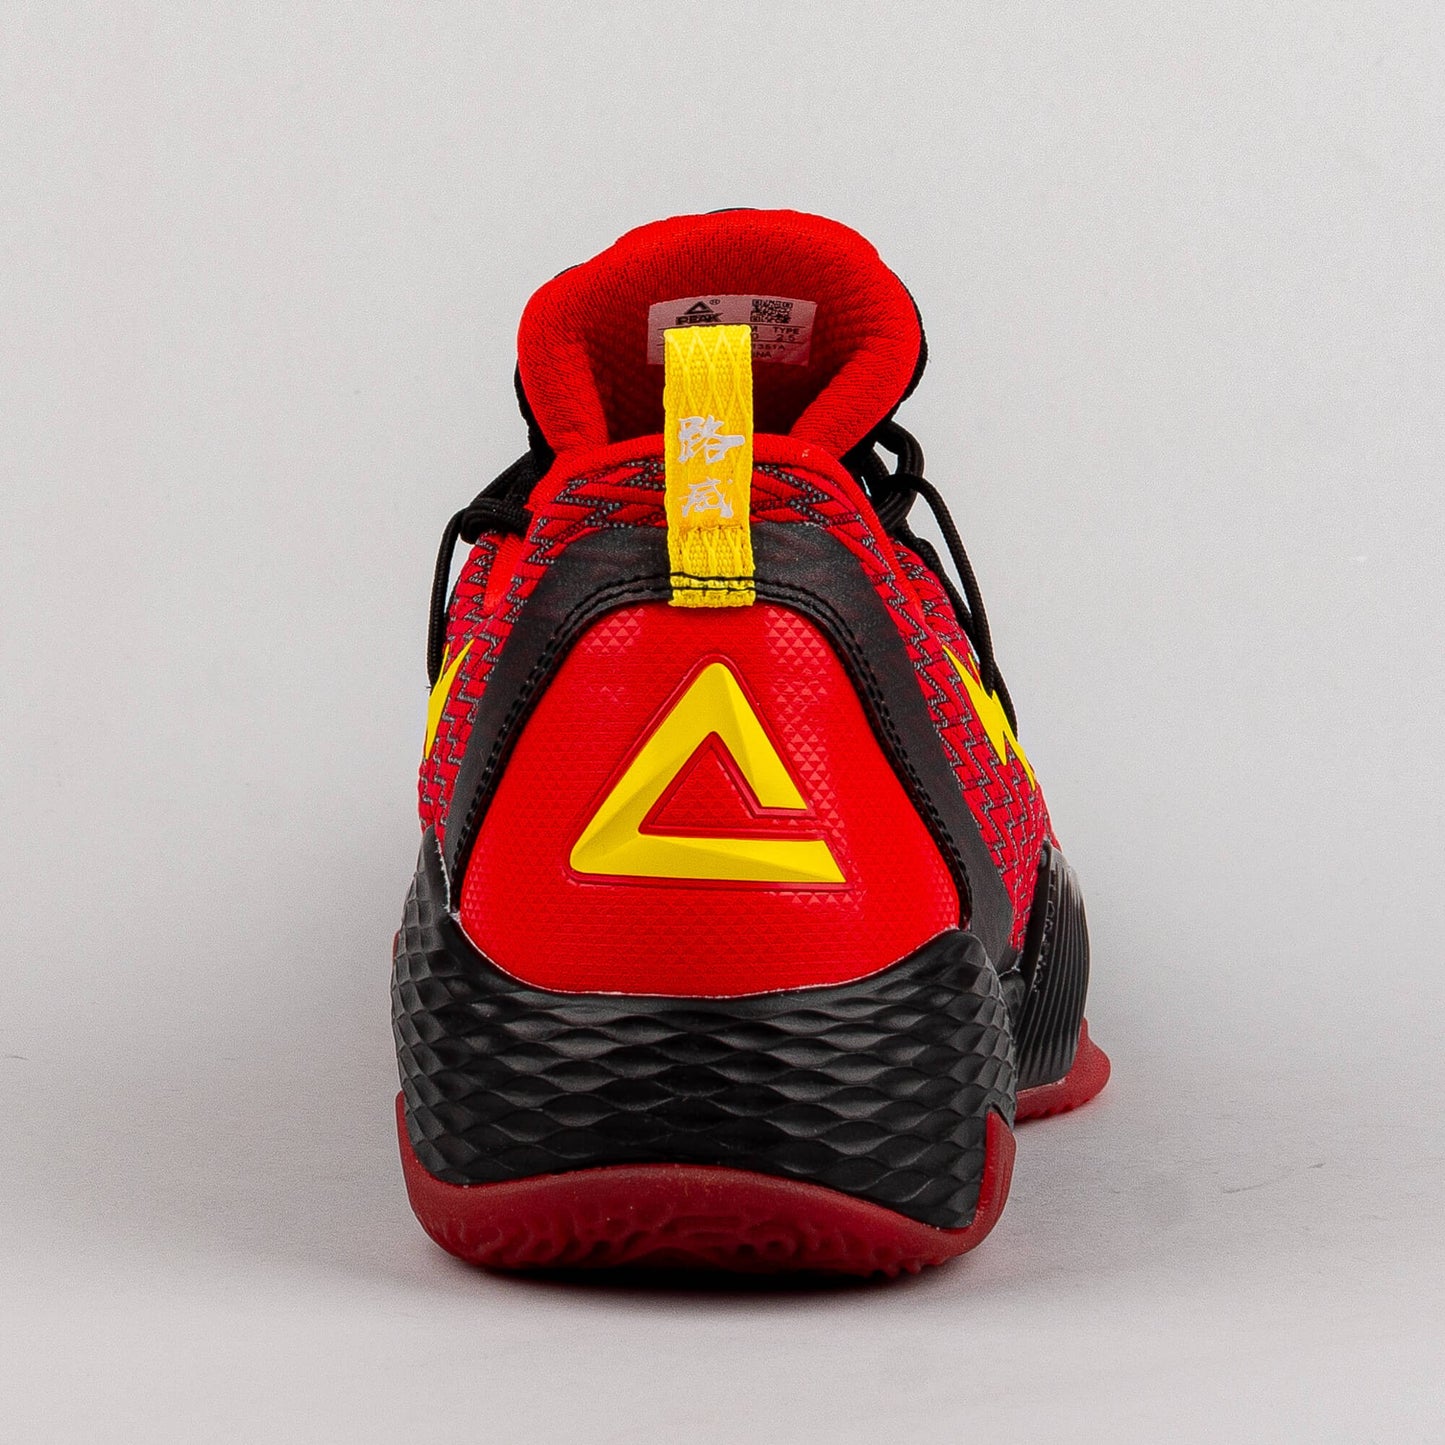 Peak Lou Williams Signature Basketball Shoes Lighting Red/Black